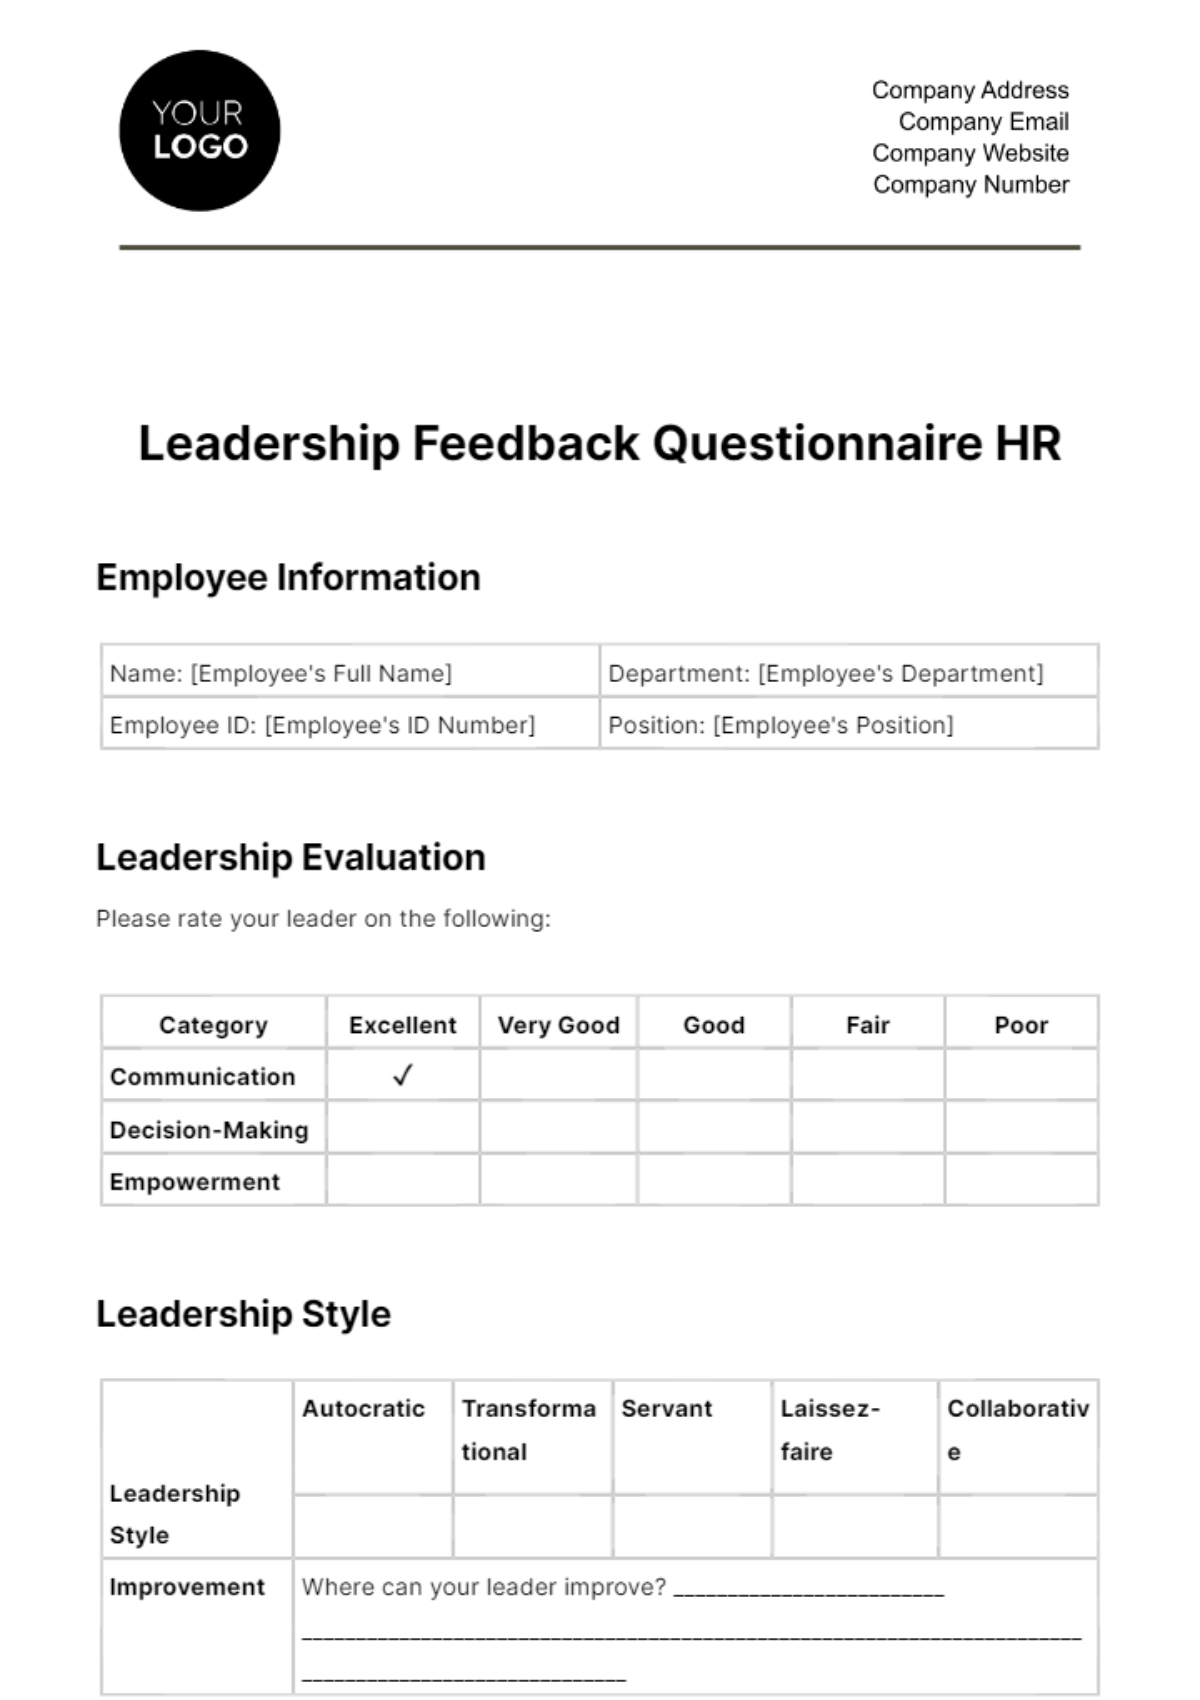 Leadership Feedback Questionnaire HR Template